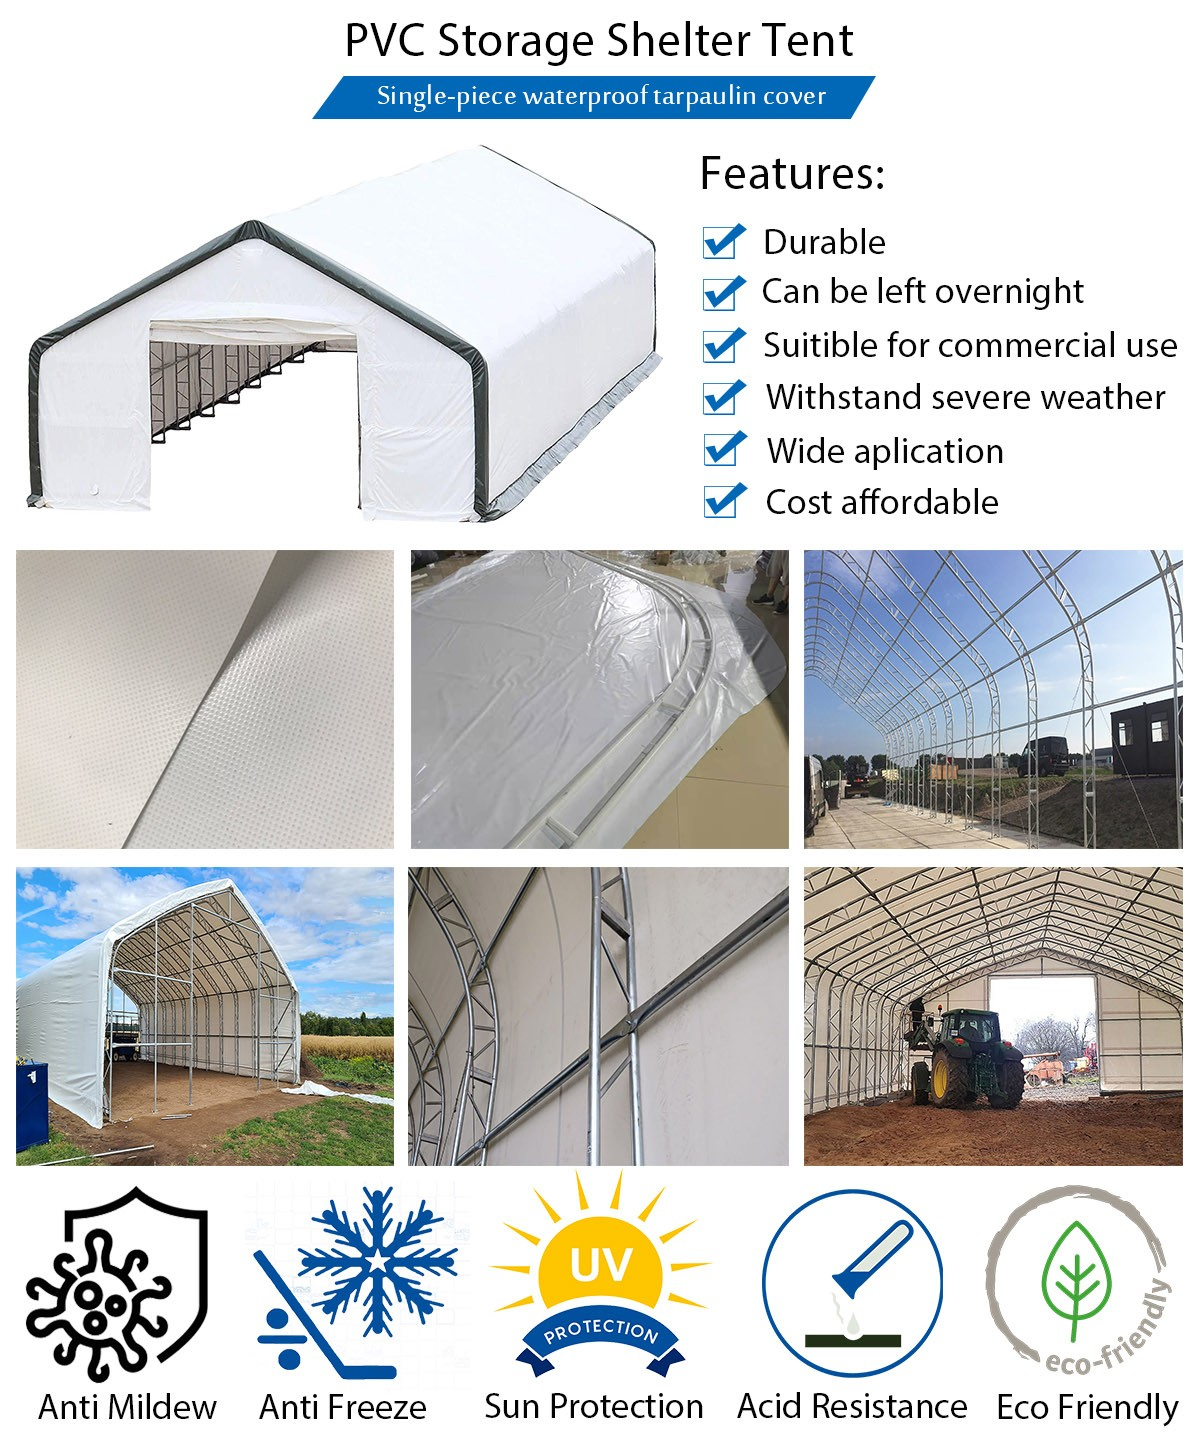 PVC storage shelter tent